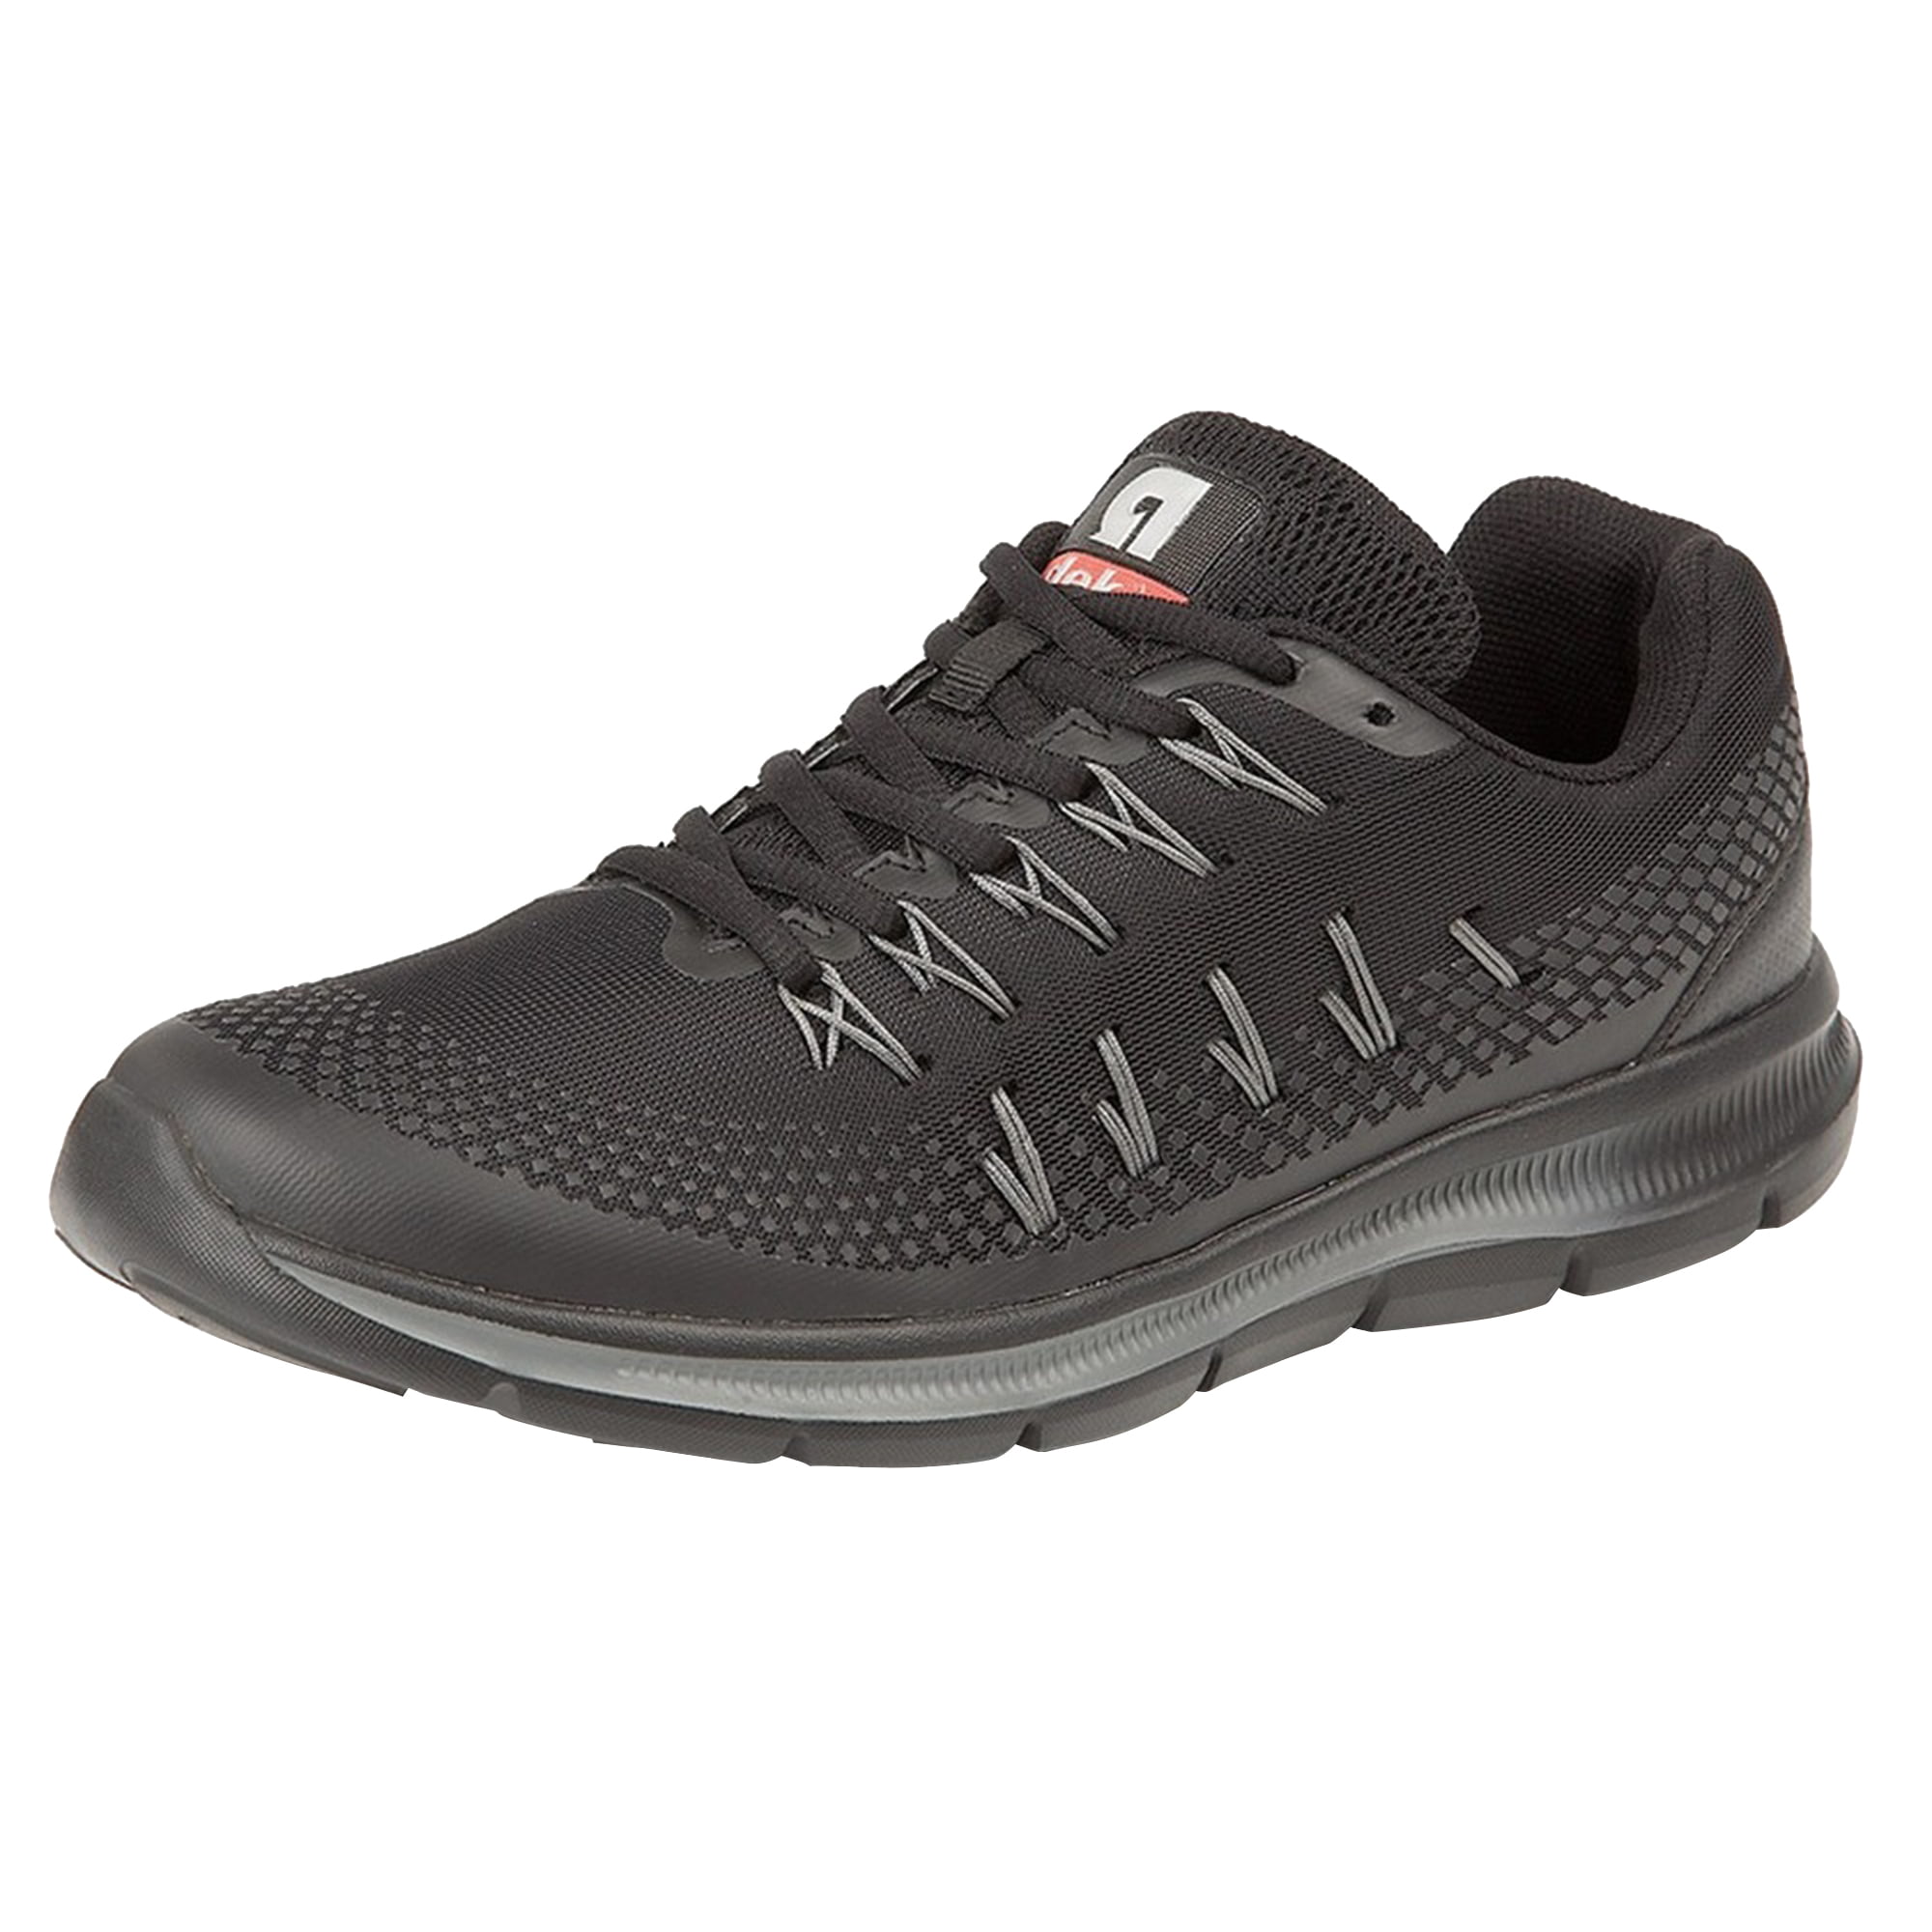 Dek mens running trainers Gym Memory Foam Lightweight Padded Soft Shoes m459 